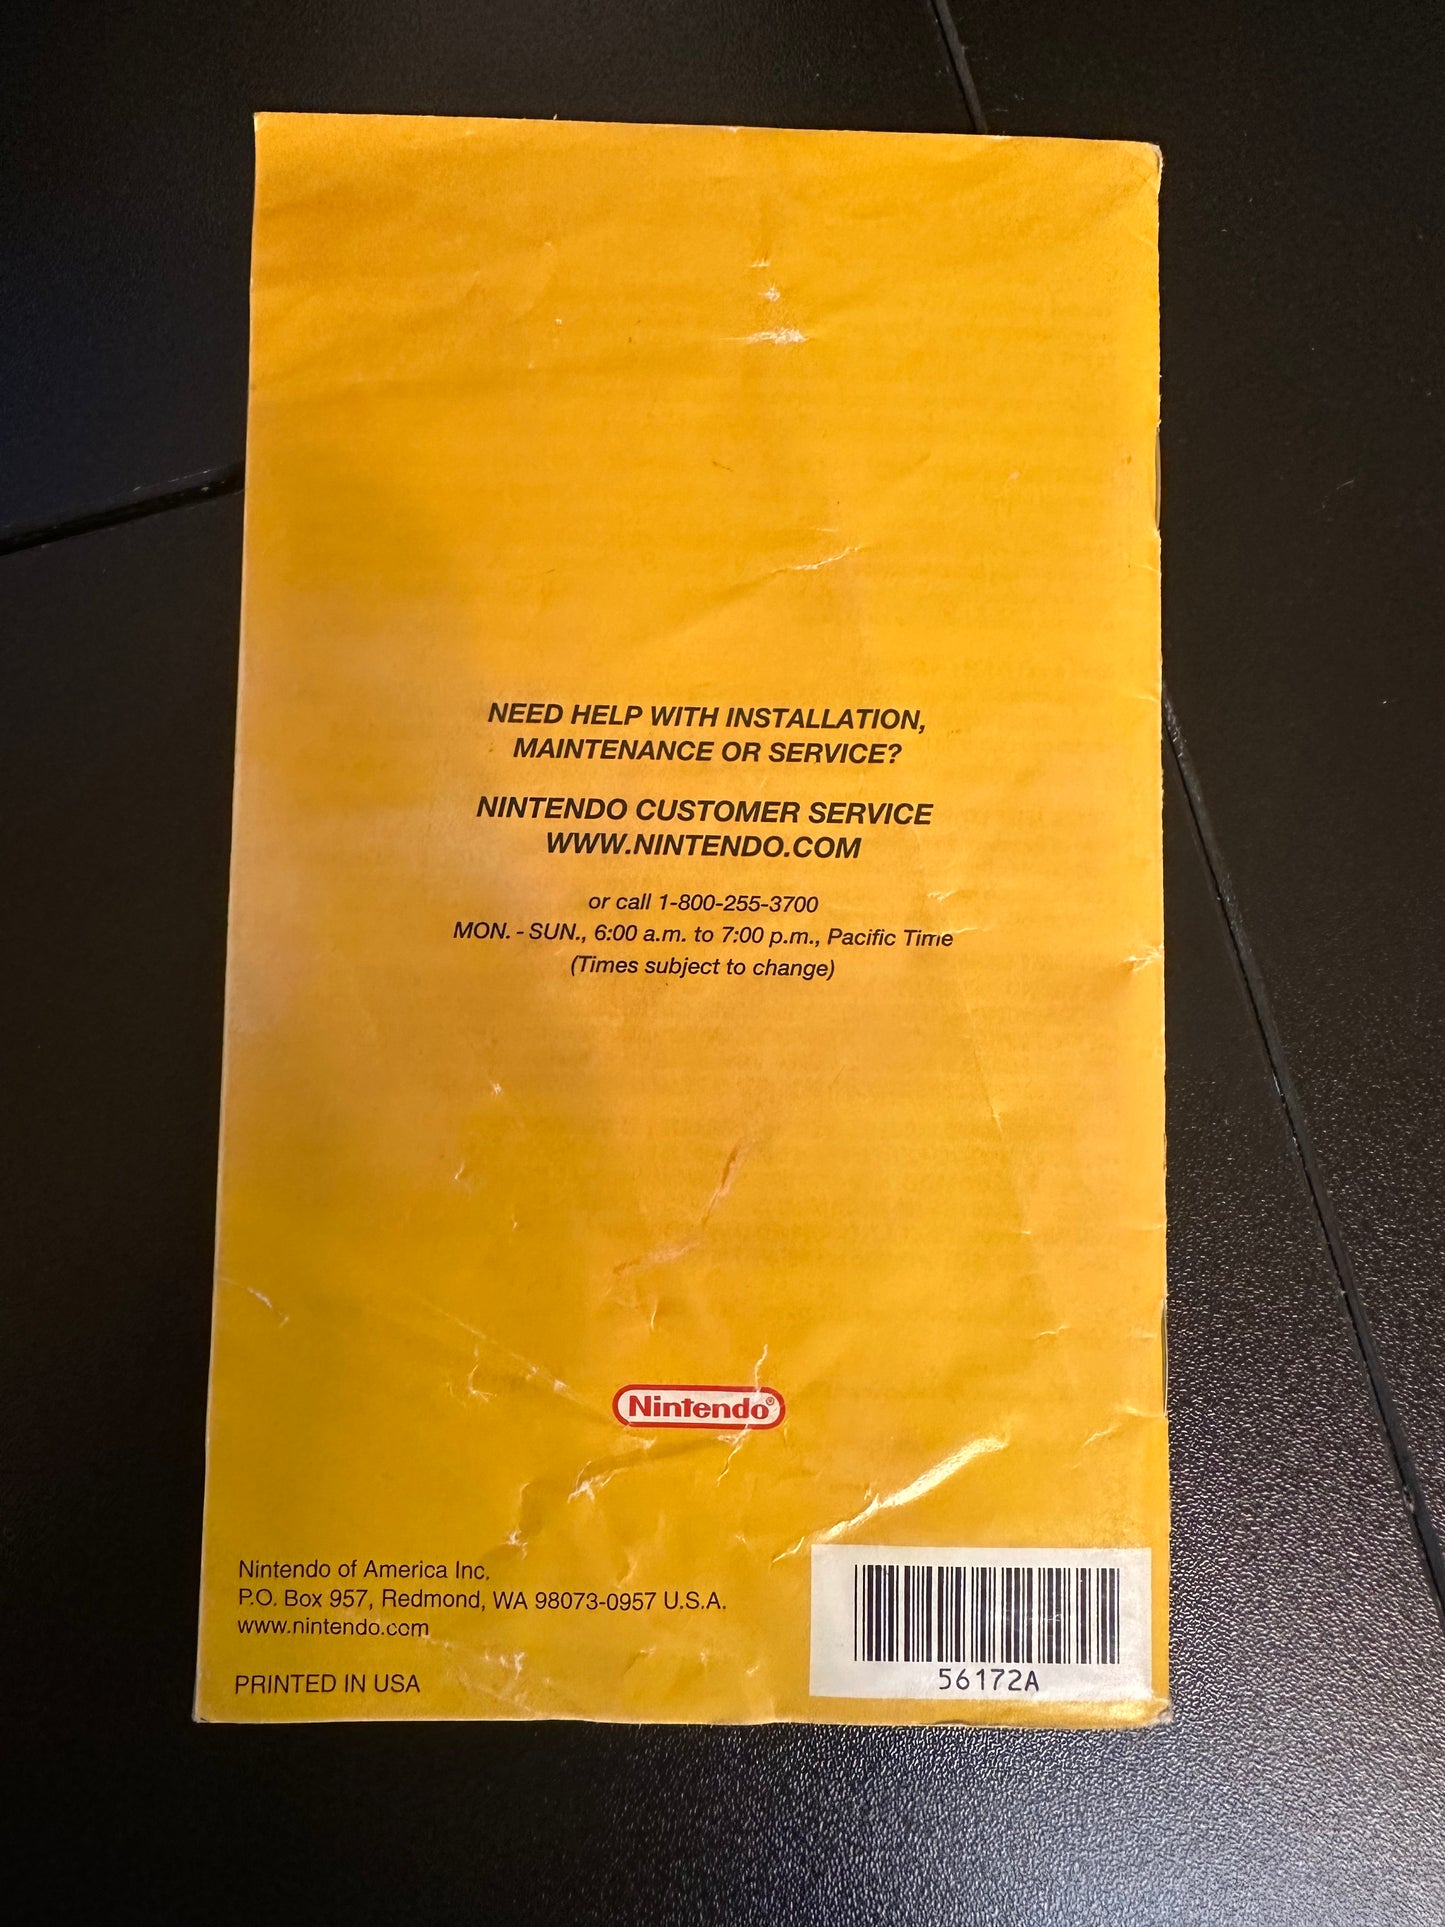 Mario Party 6 Nintendo GameCube Manual Only